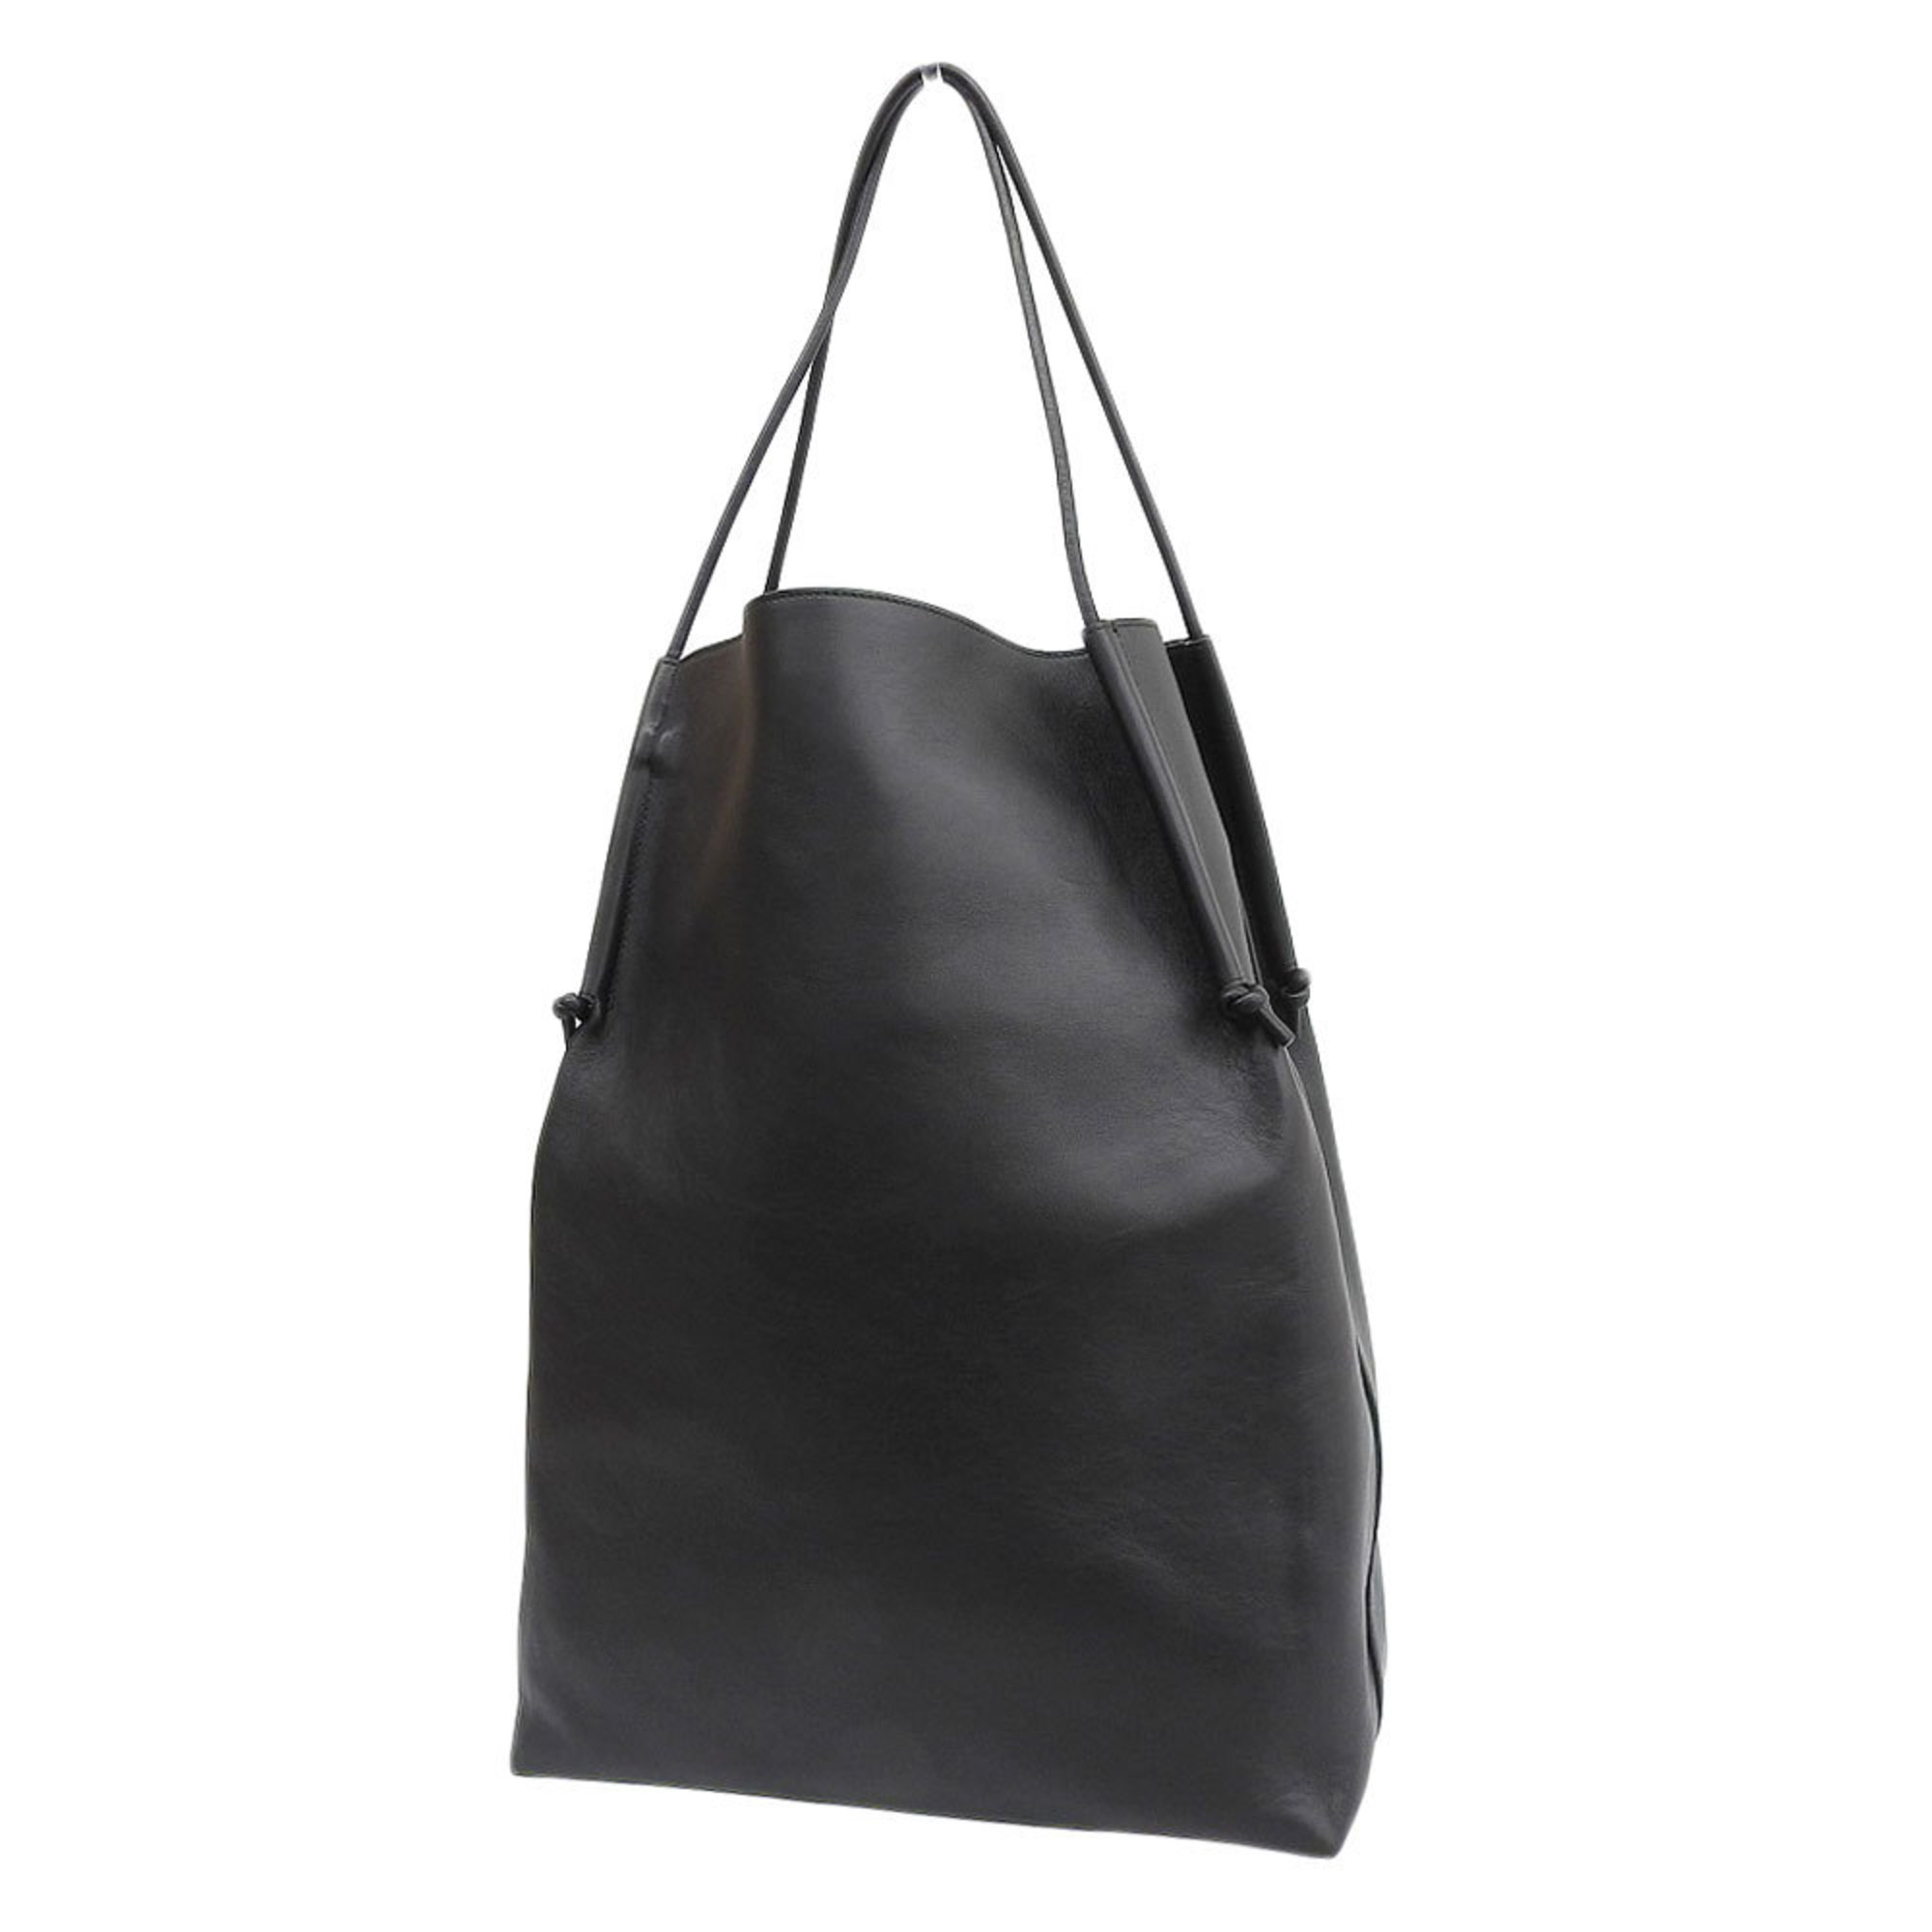 Bottega Veneta tote bag handbag simple nappa 629478 vcp40 1229